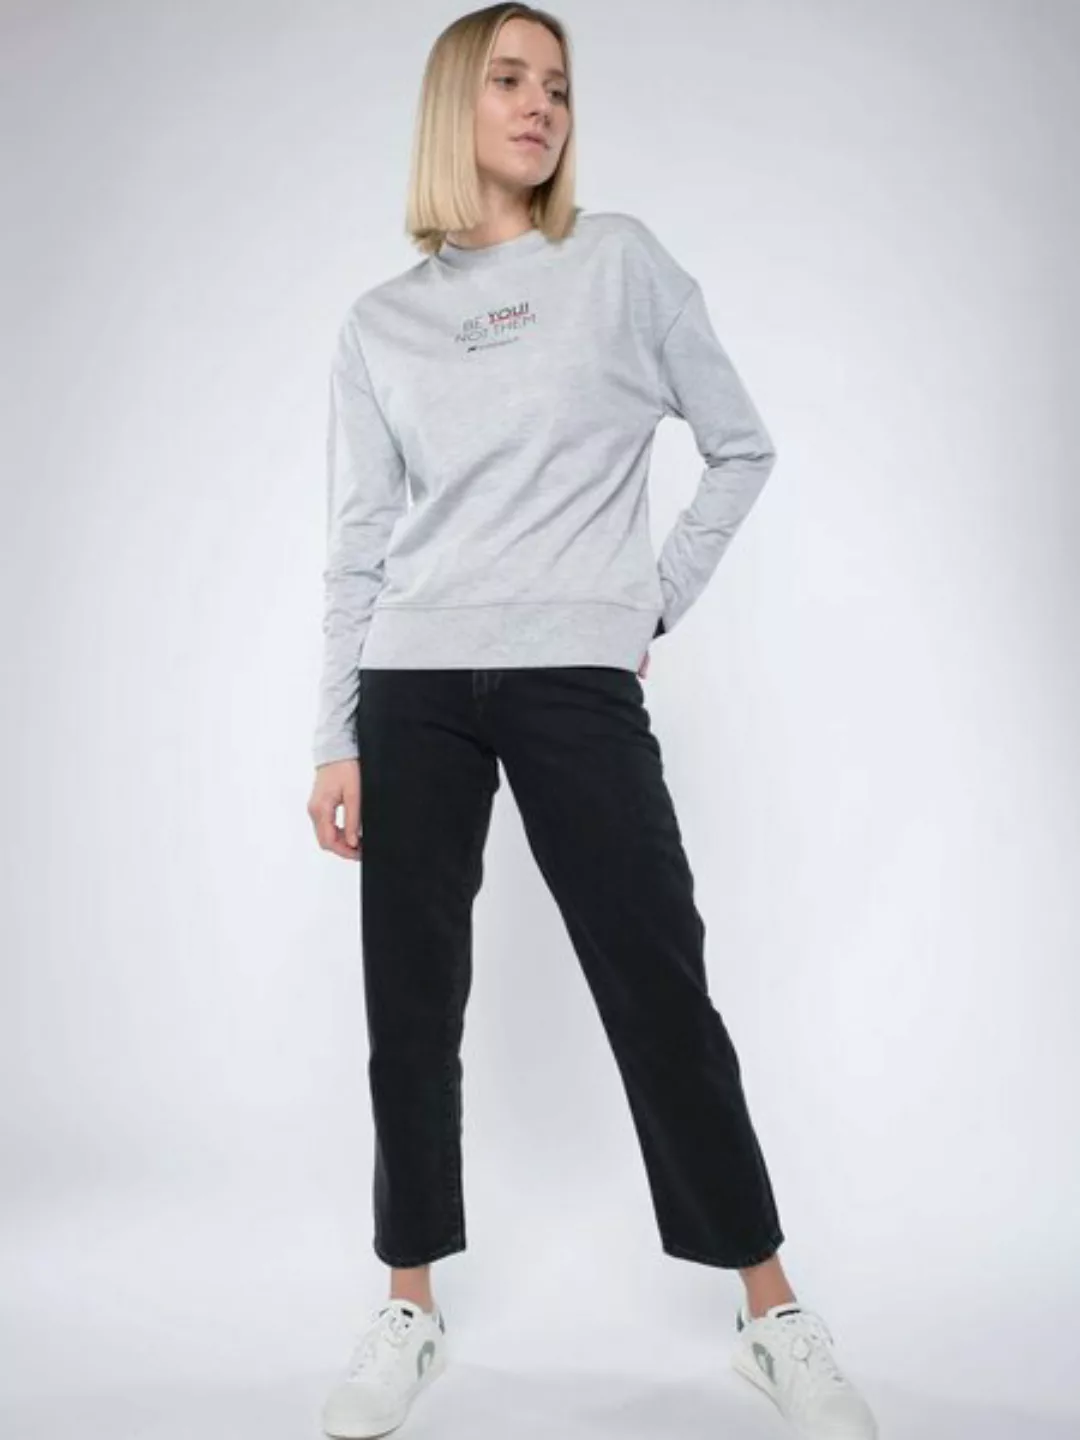 Damen Sweater Be You! Not Them (Grau) günstig online kaufen